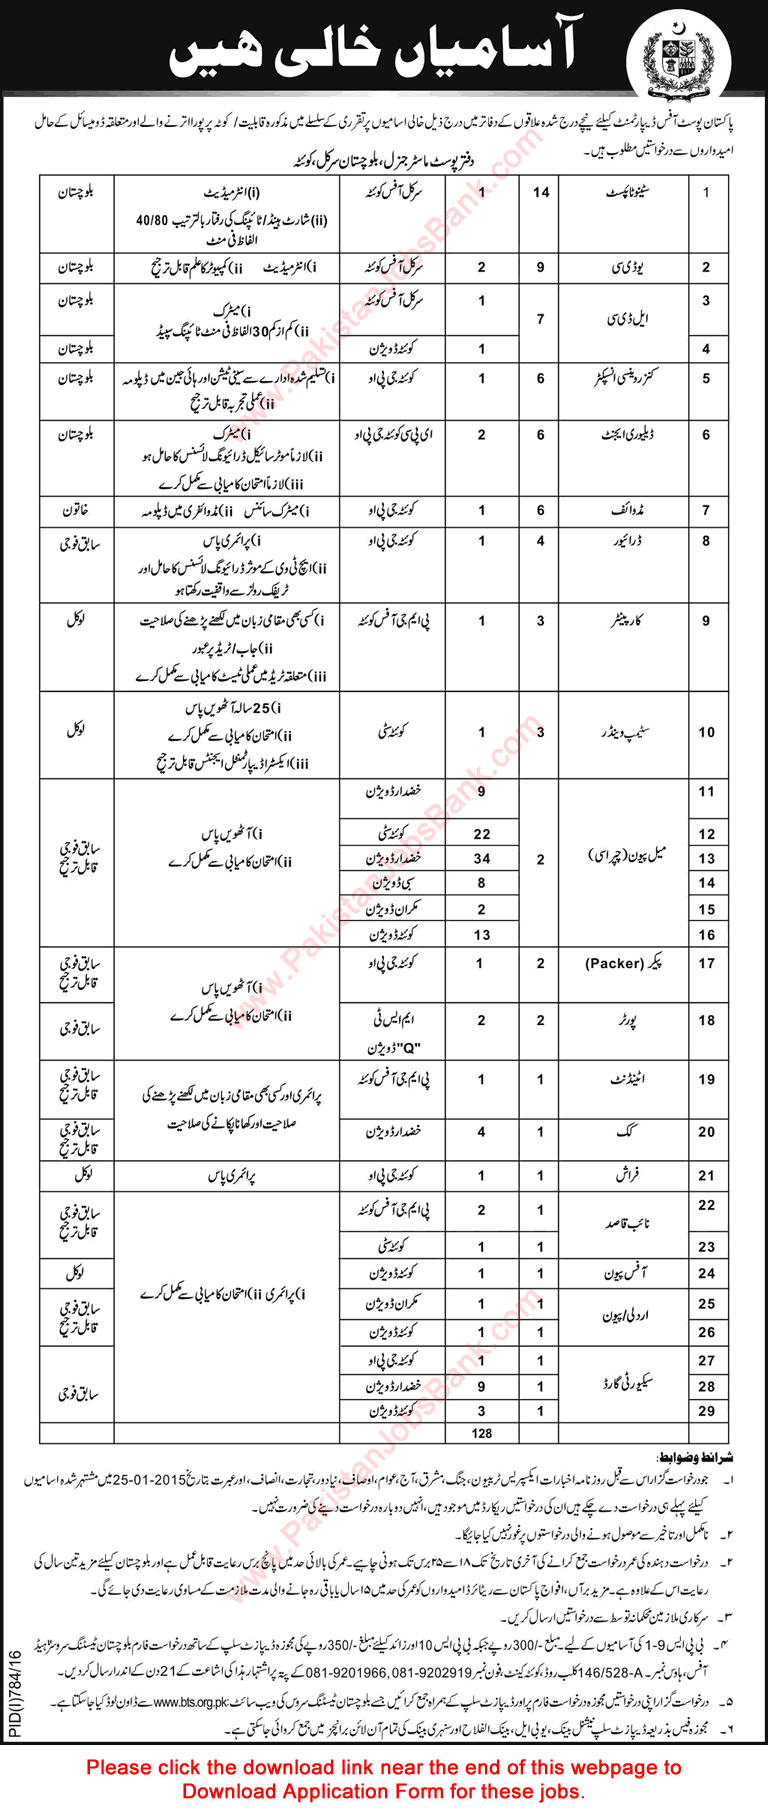 Pakistan Post Office Jobs August 2016 in Balochistan BTS Application Form Download Latest / New